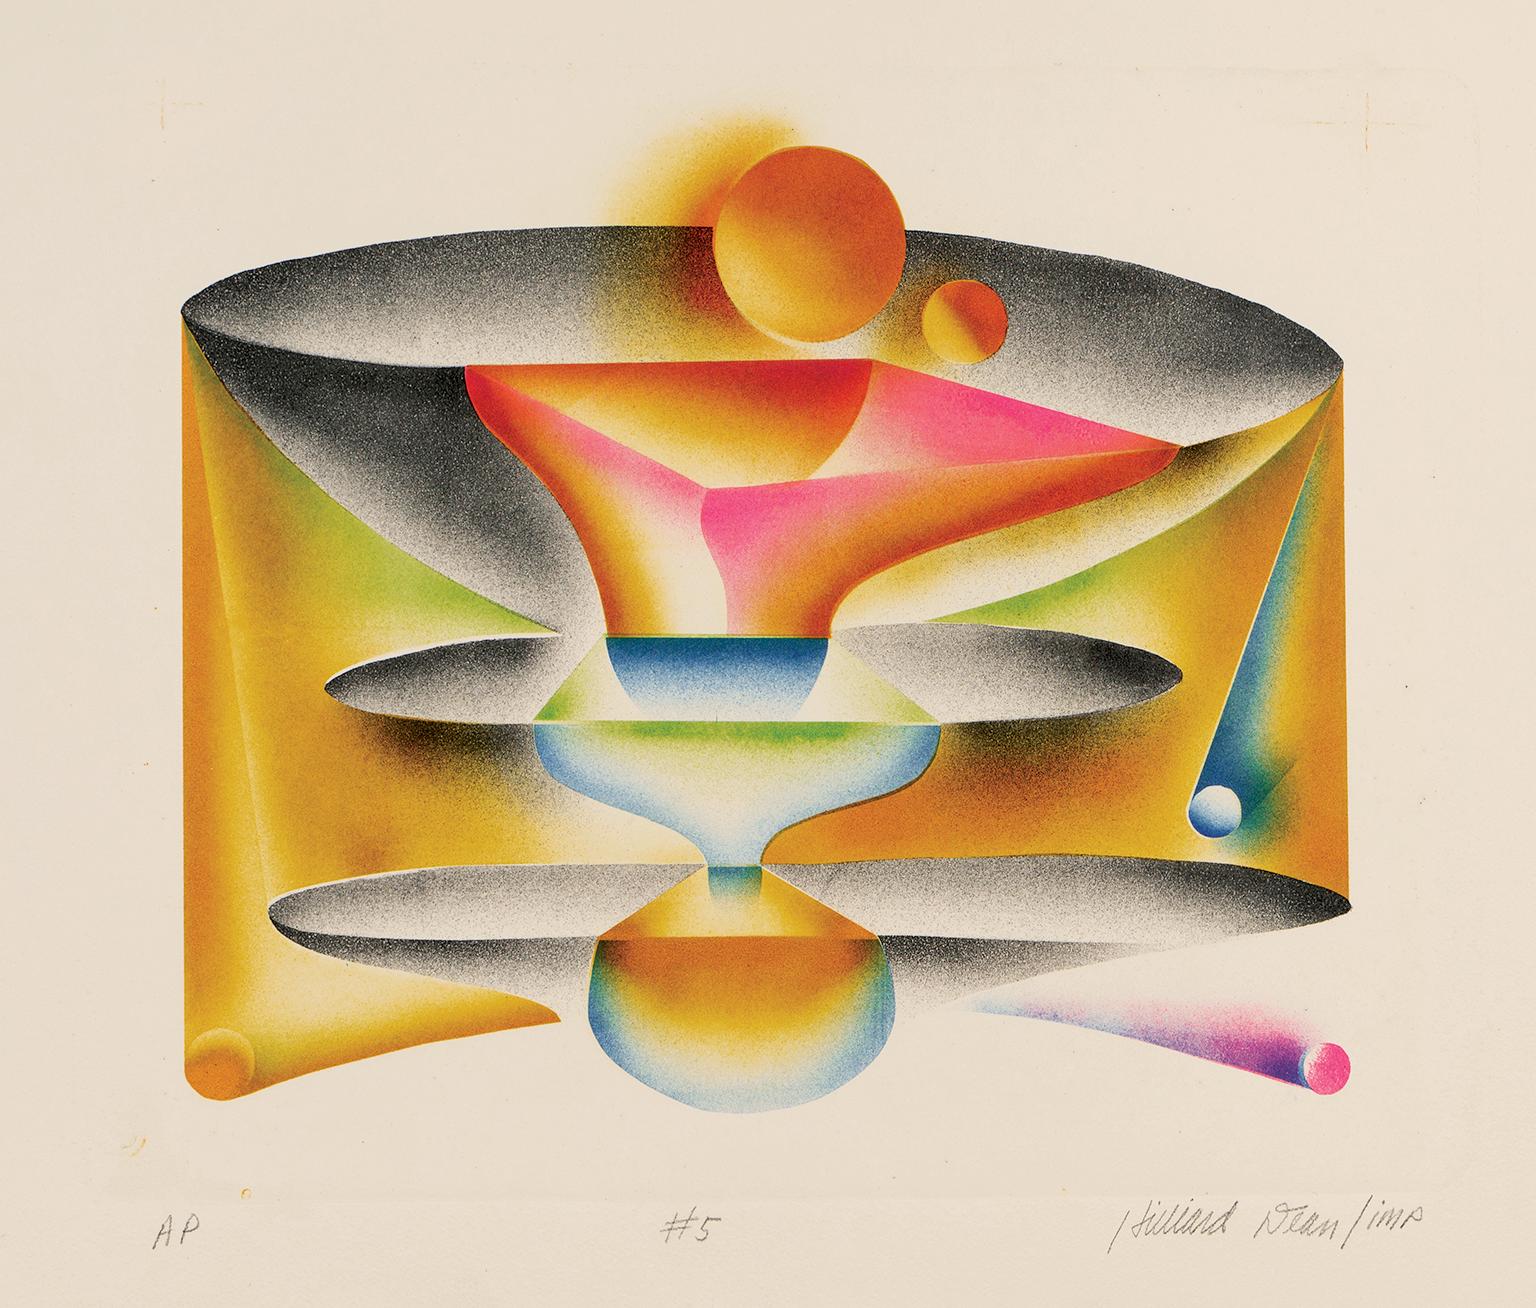 Abstract Print Hilliard Dean - #5 - Abstraction moderniste - Artiste afro-américain